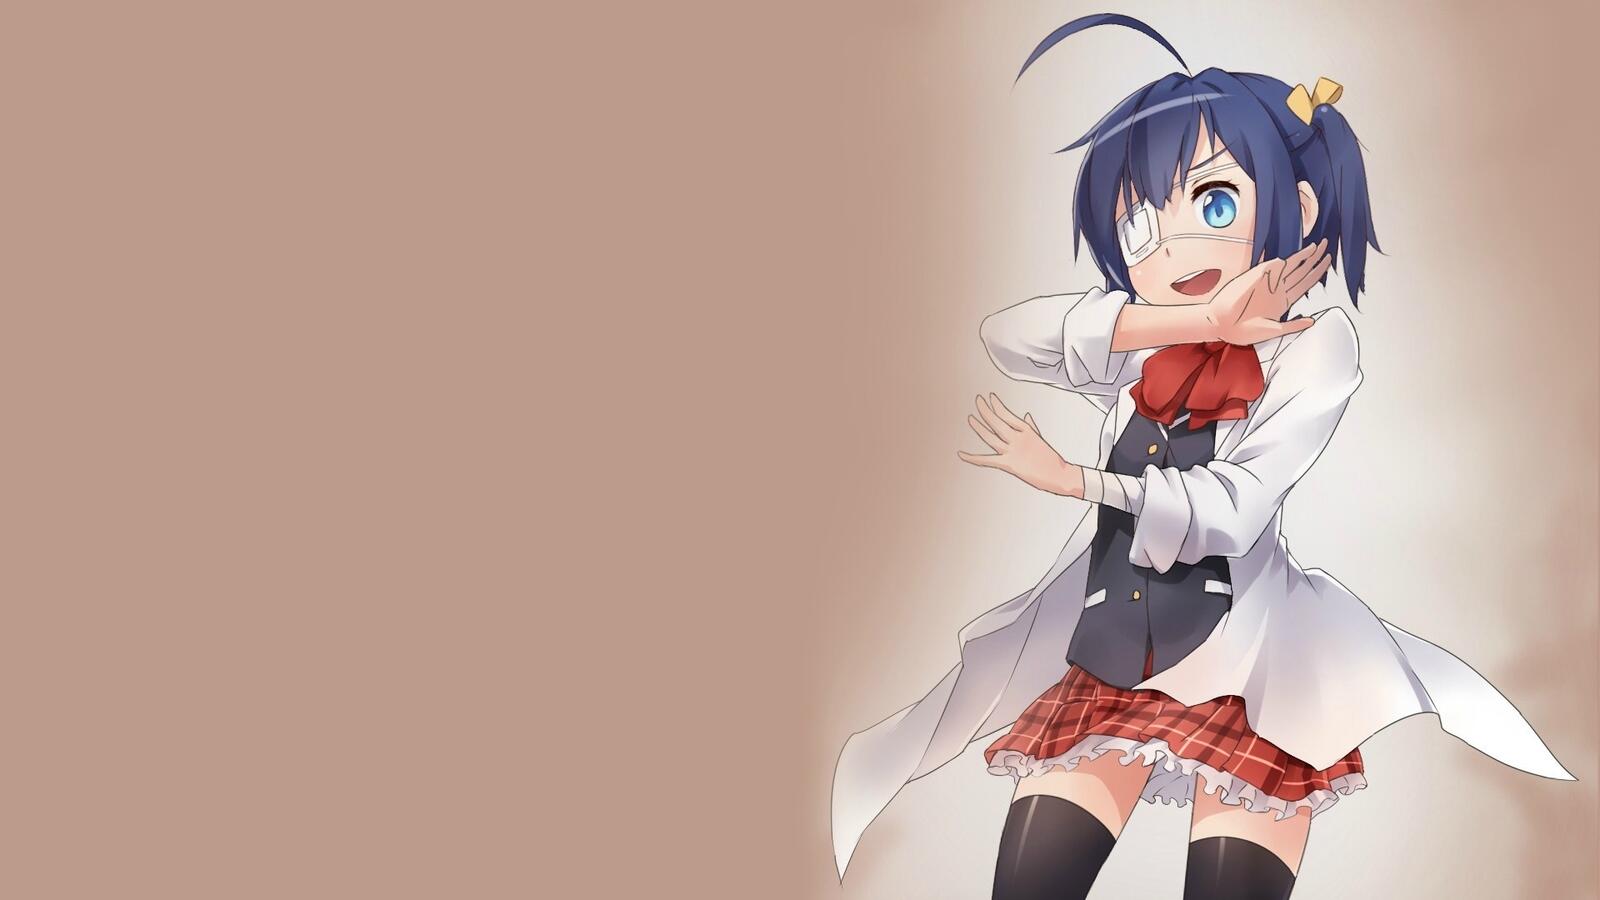 Wallpapers takanashi rikka school uniform anime on the desktop